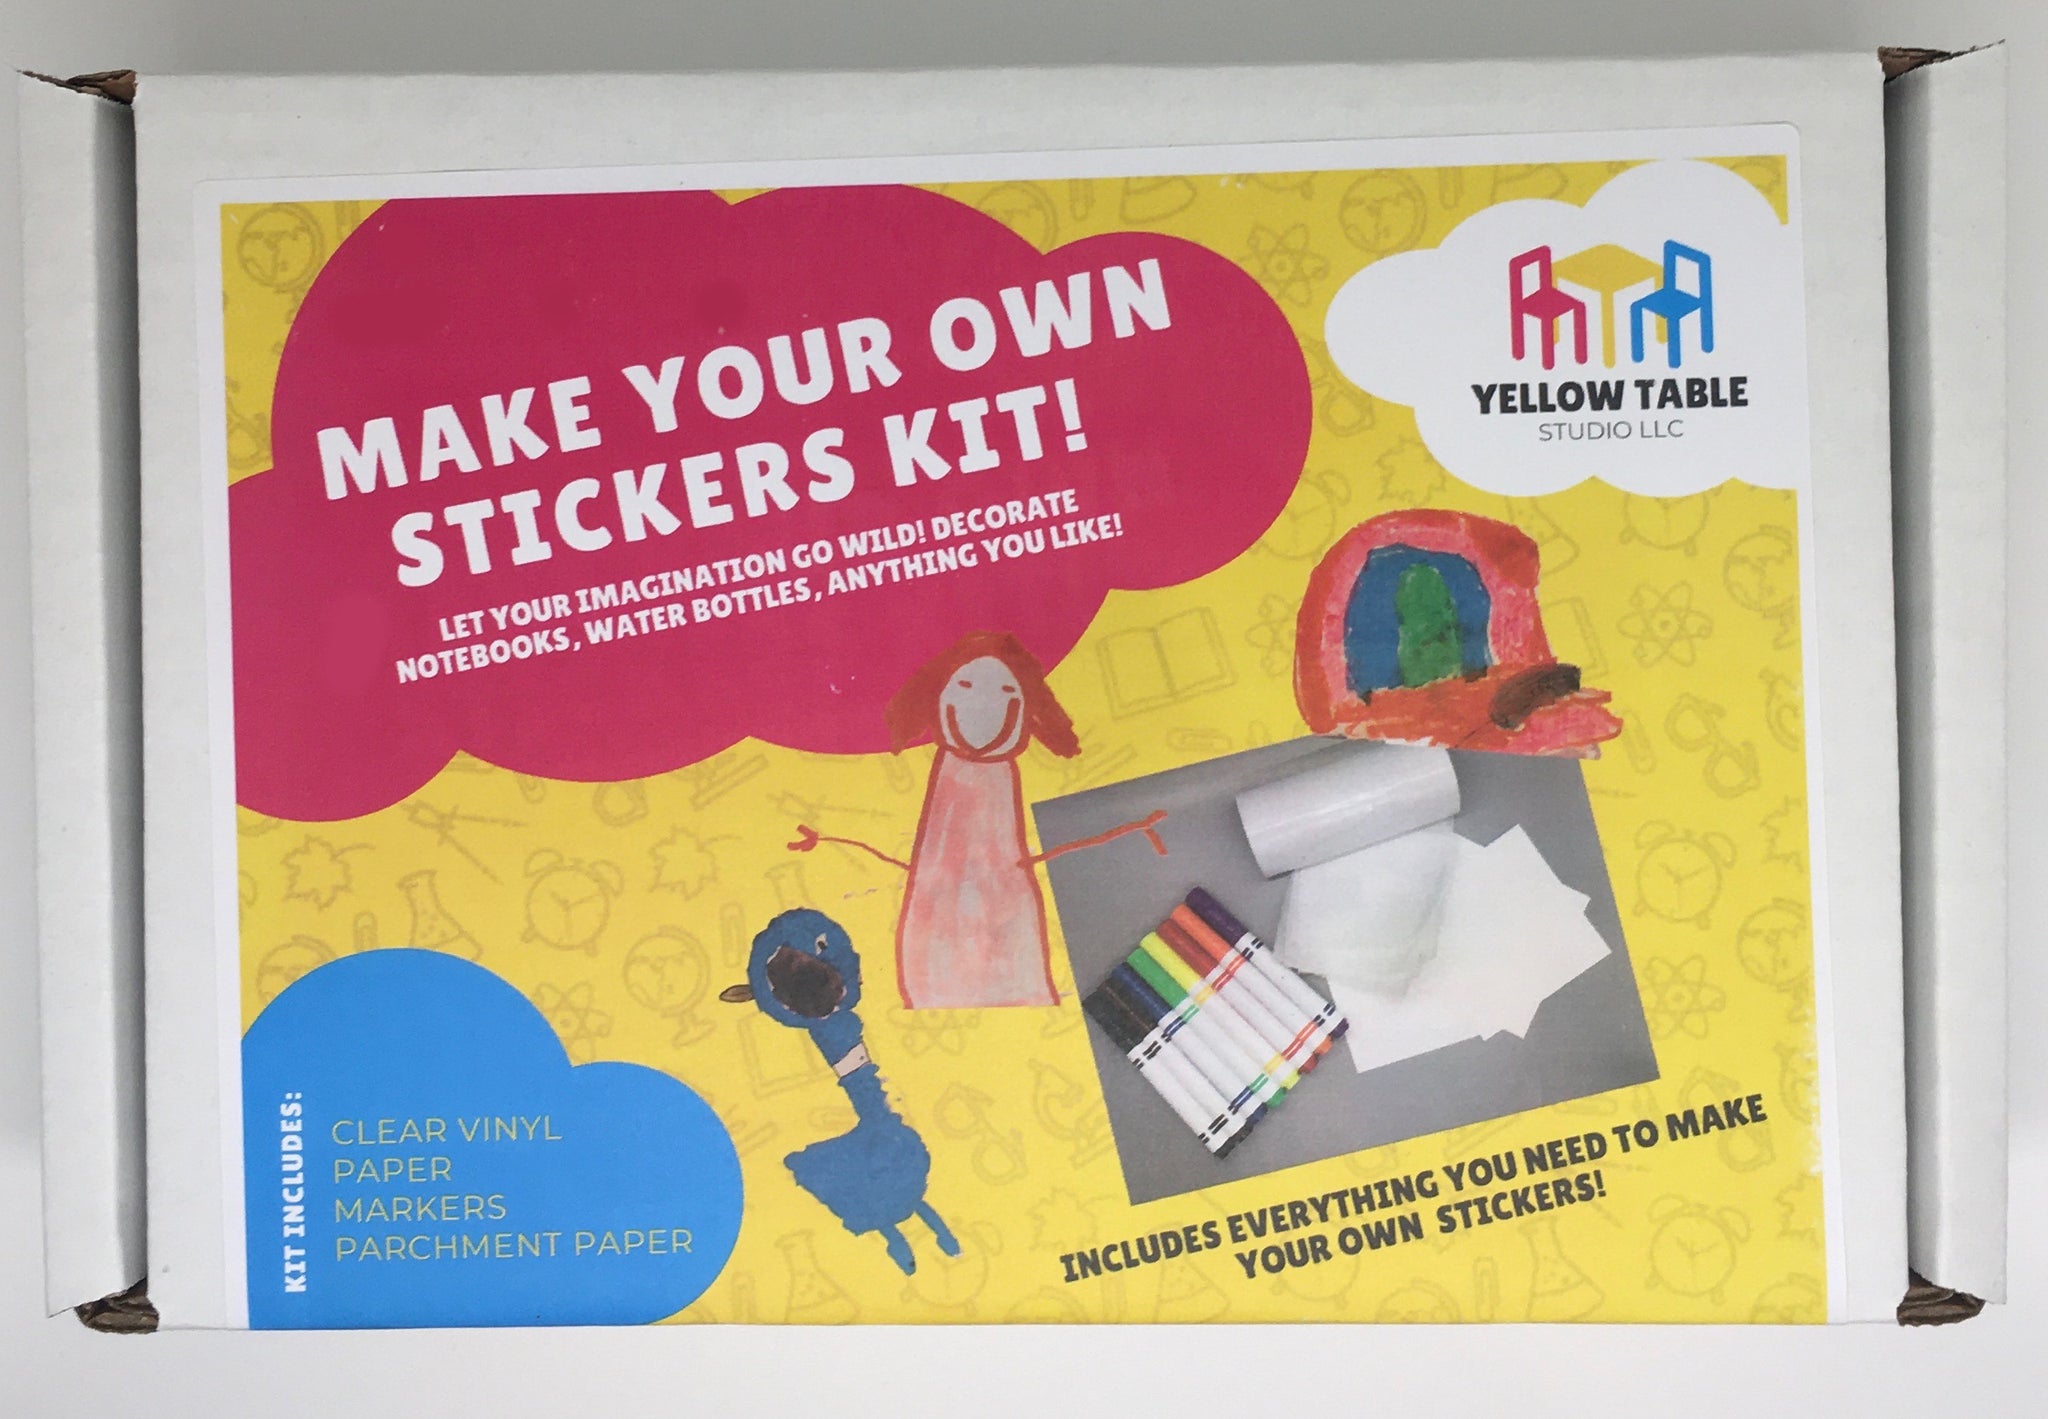 DIY Stickers Kit! – Yellow Table Studio